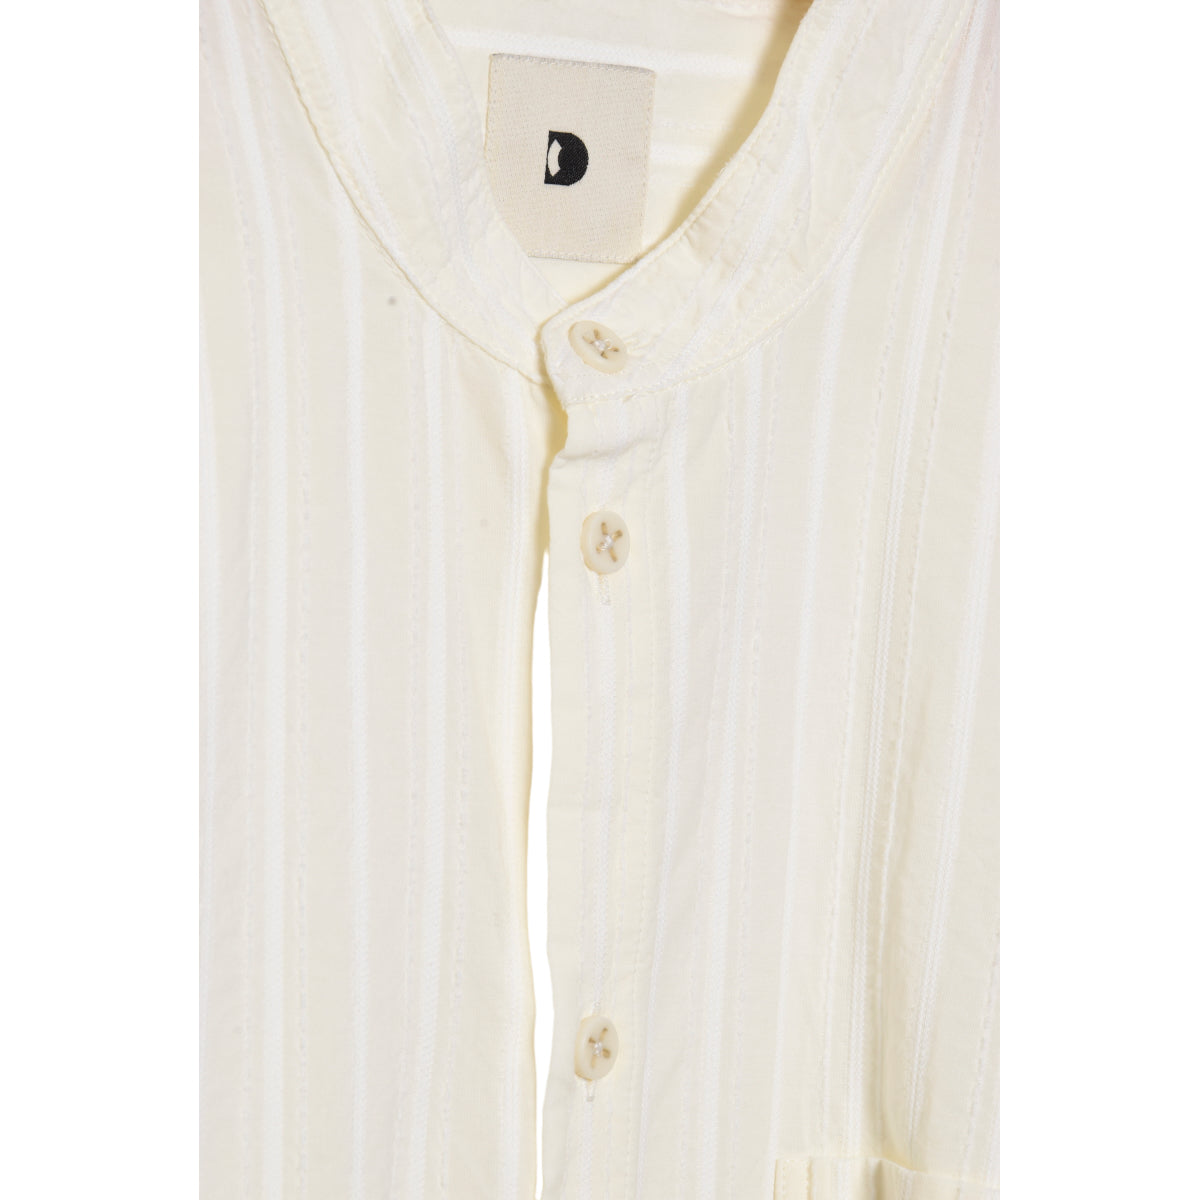 Delikatessen Zen Shirt stripe white jacquard